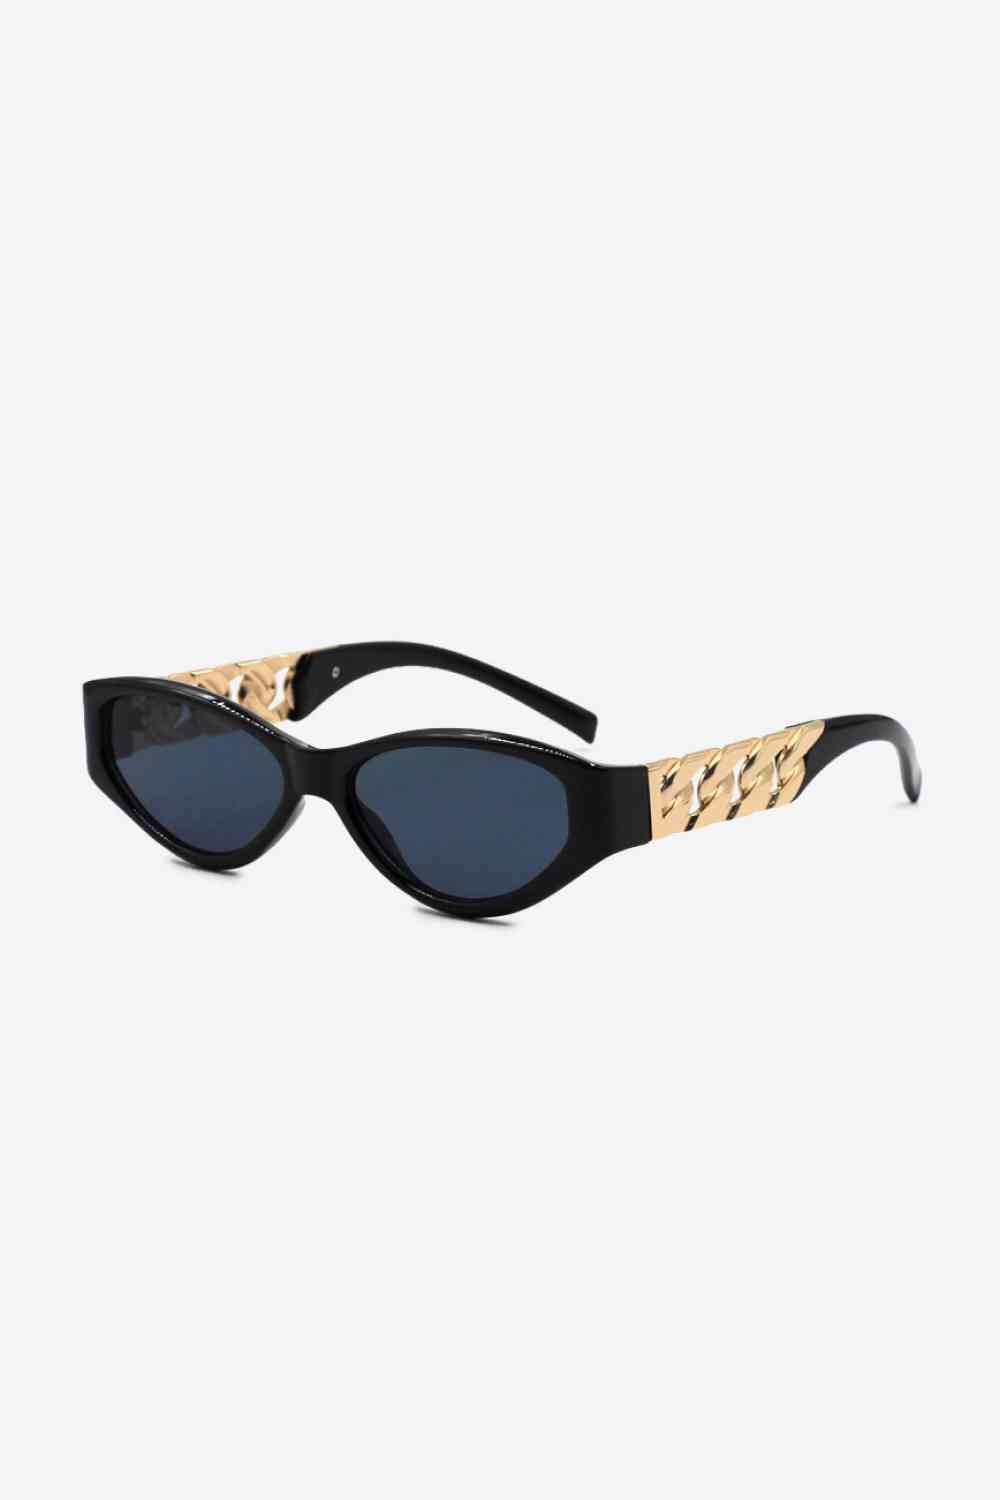 TEEK - Flat Side Chain Temple Cat Eye Sunglasses EYEGLASSES TEEK Trend Black  